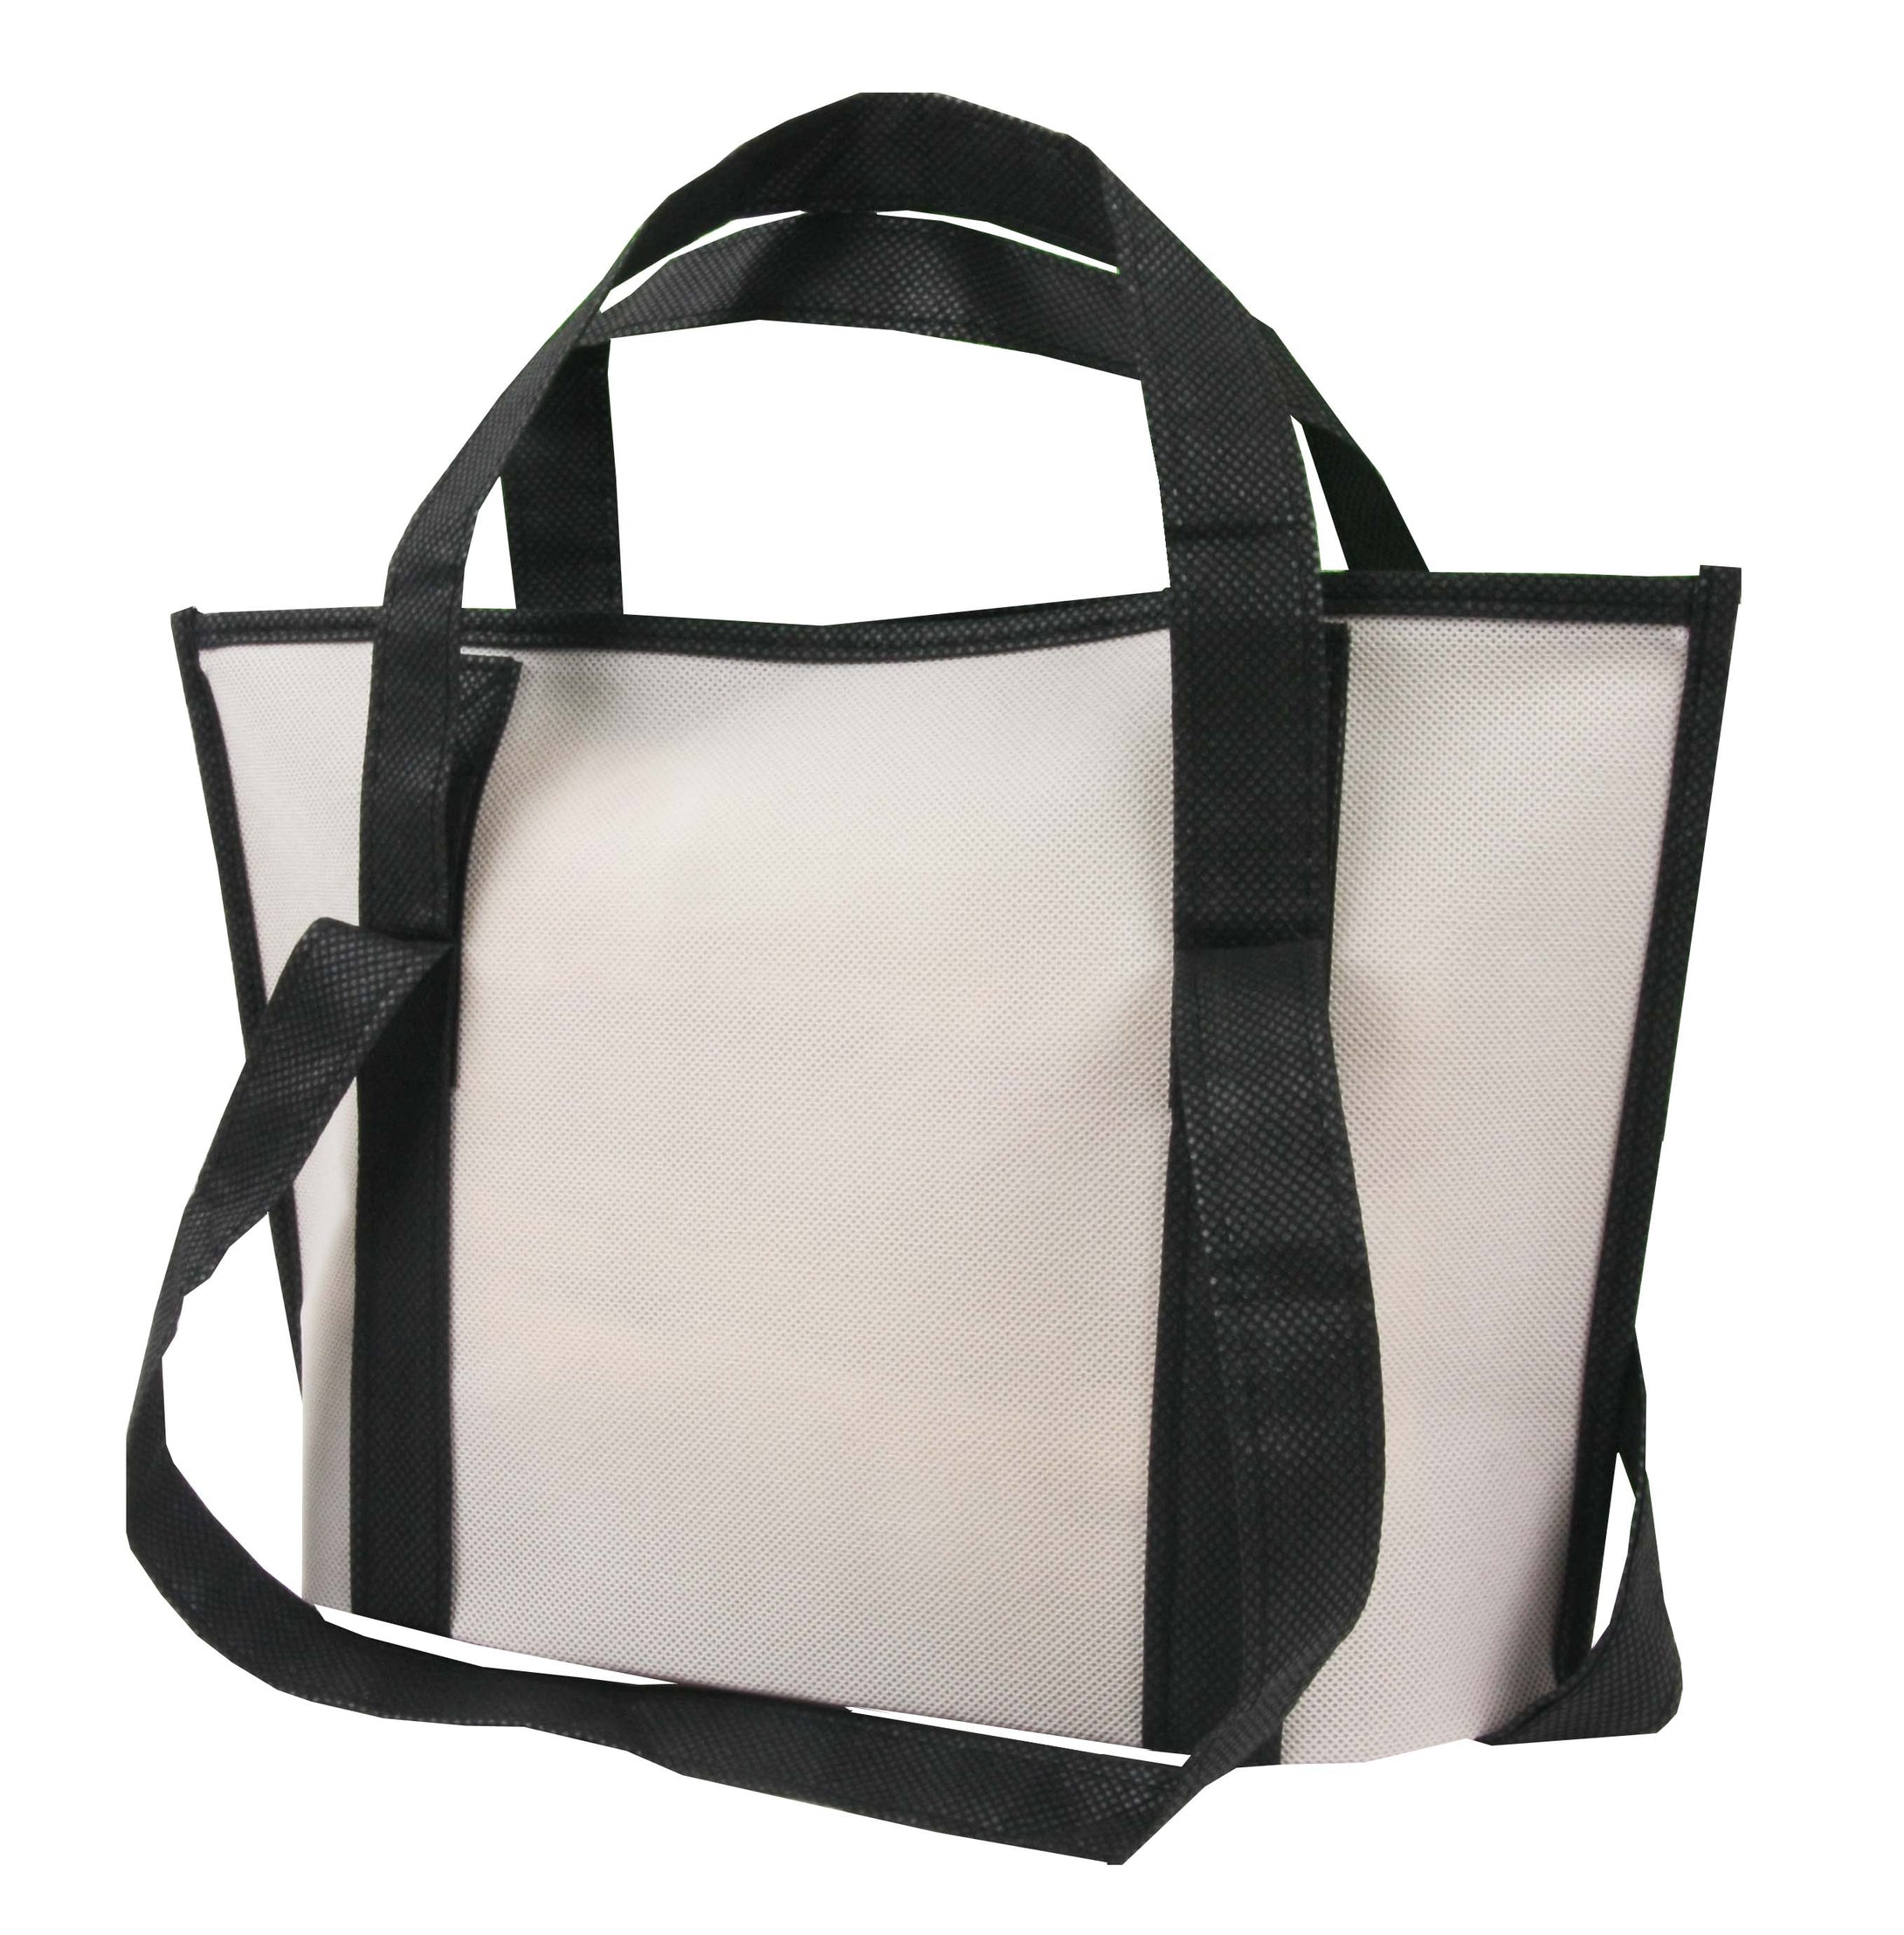 JLSB-0041 Sewn Bag